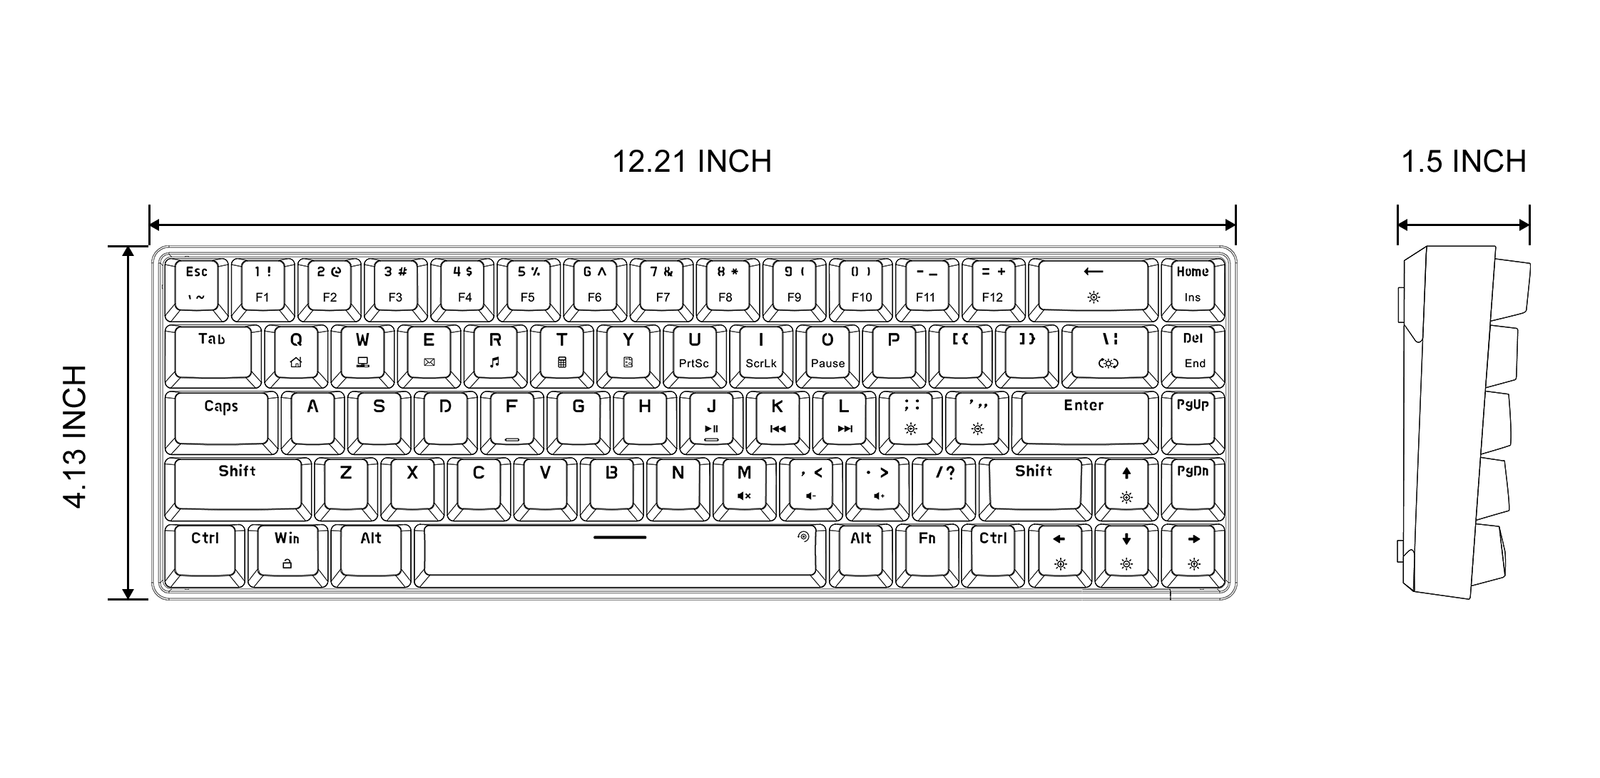 TMKB T68SE 65% Wired Mechanical Keyboard – dierya